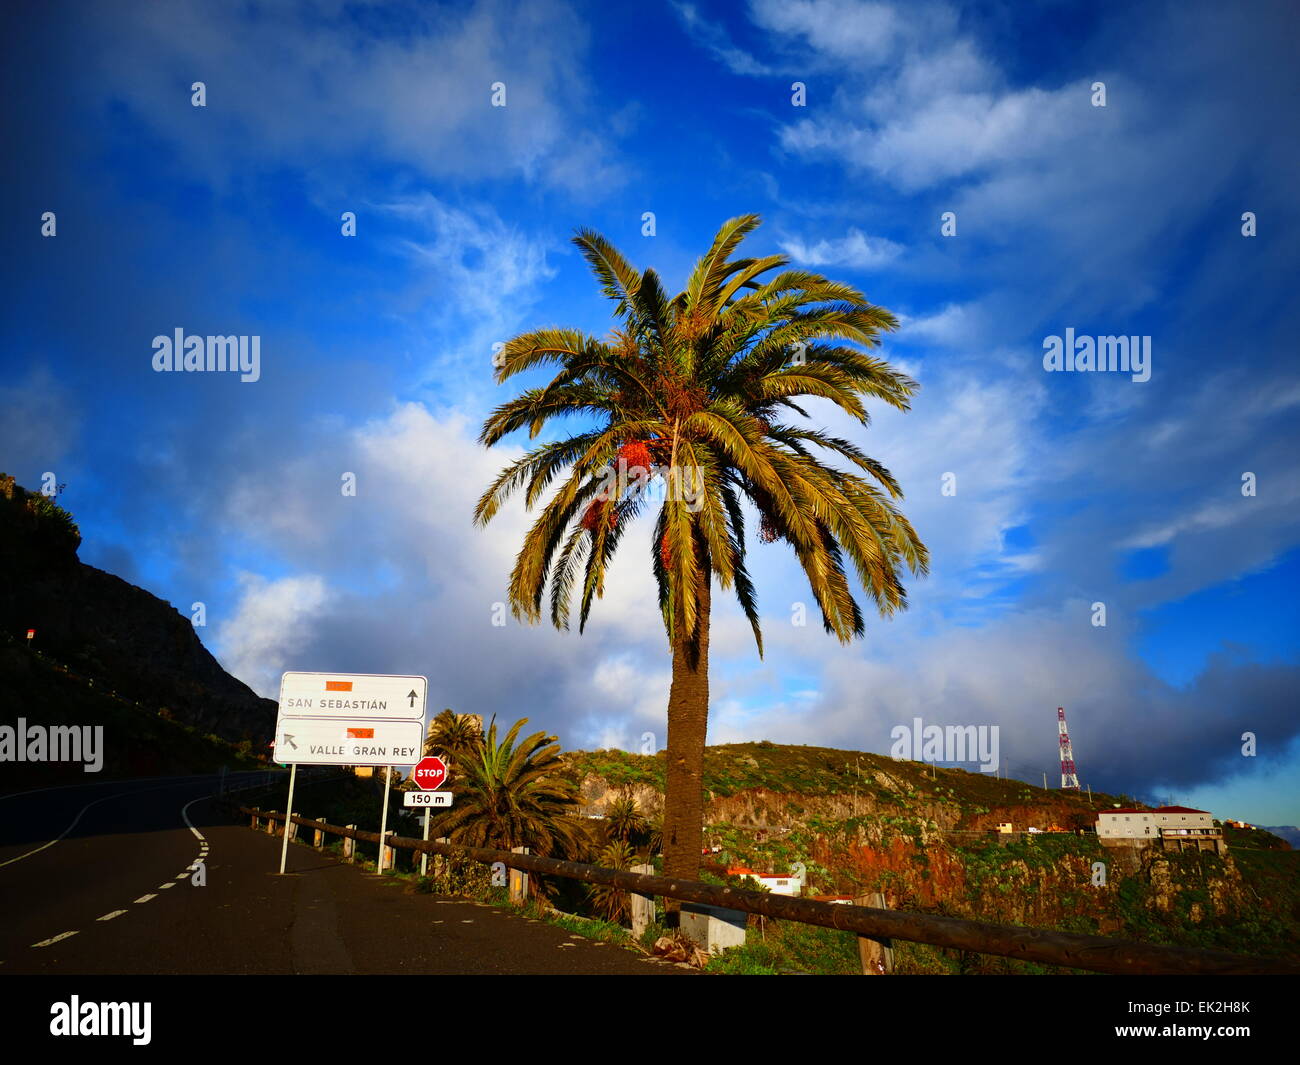 Road sign San Sebastian Valle Gran Rey La Gomera island Canary Islands Spain Stock Photo